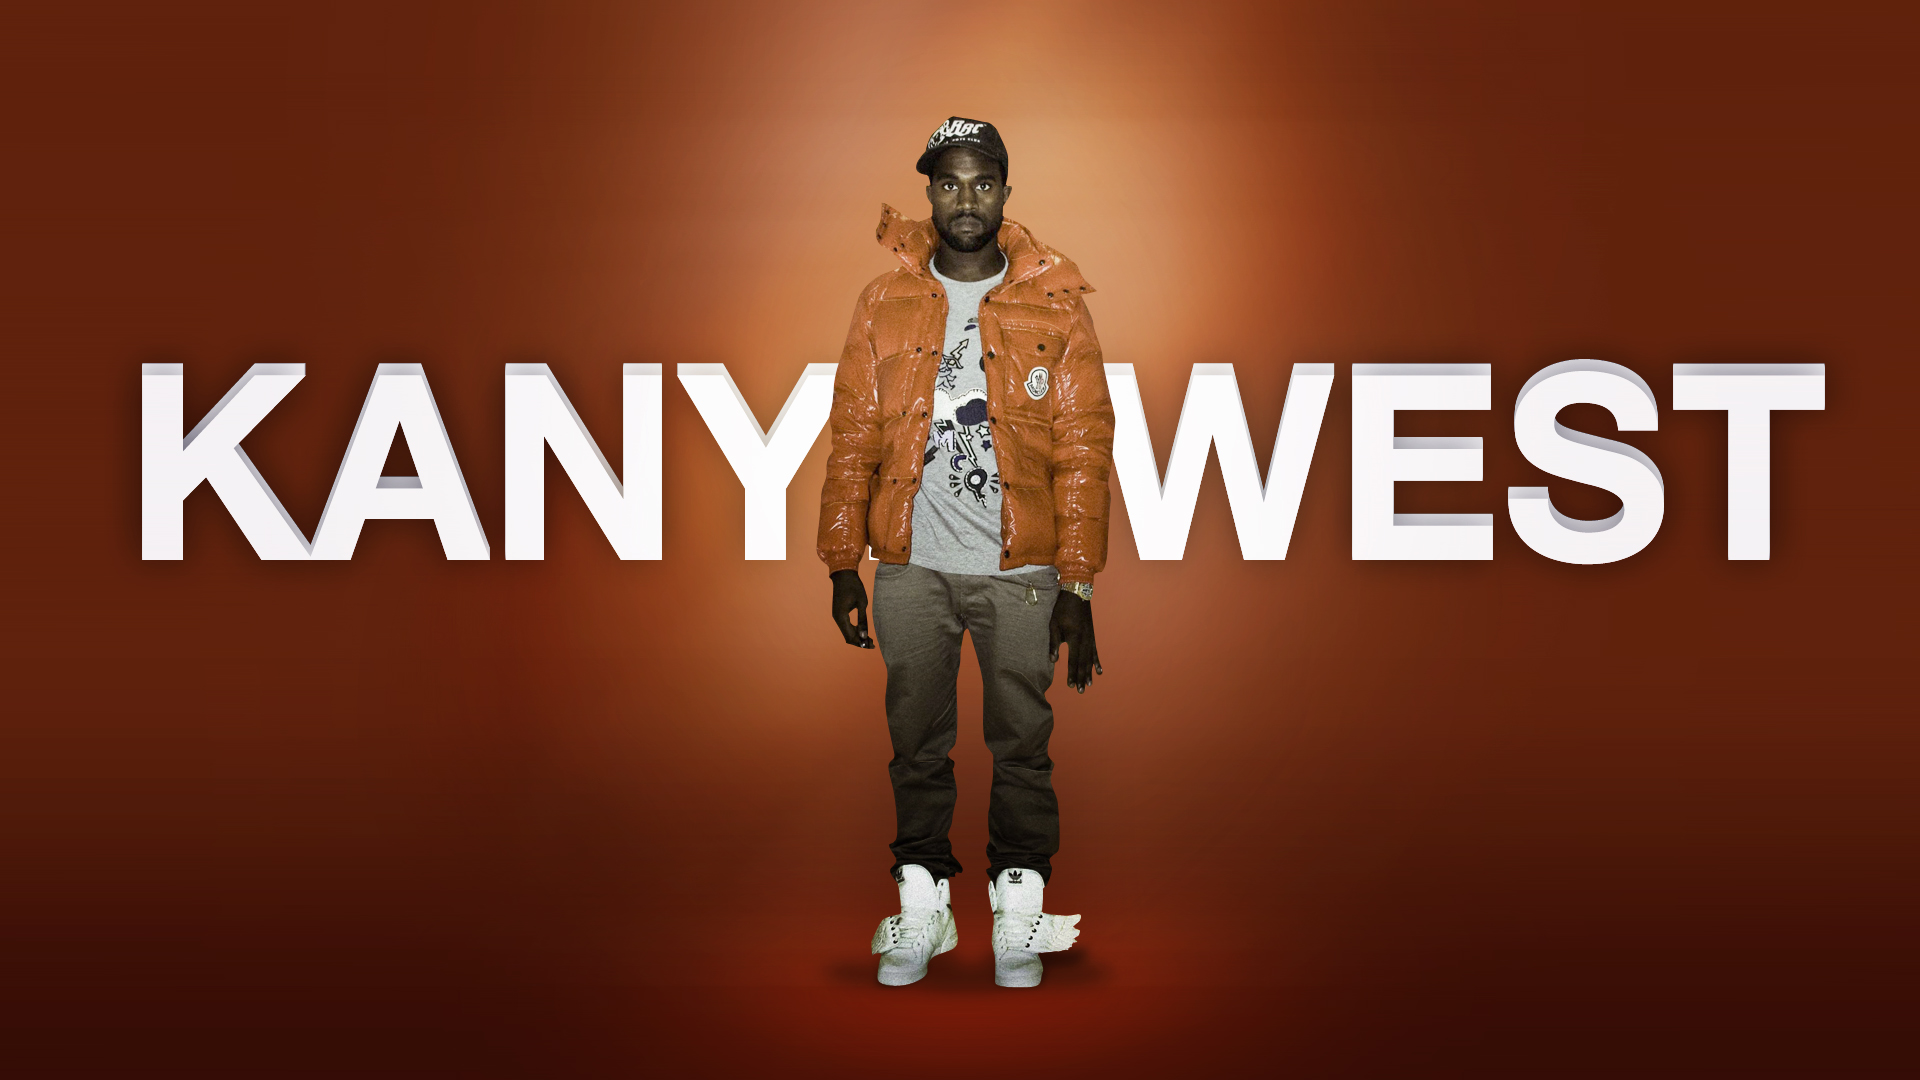 Kanye West Desktop Wallpapers   Wallpaper High Definition High